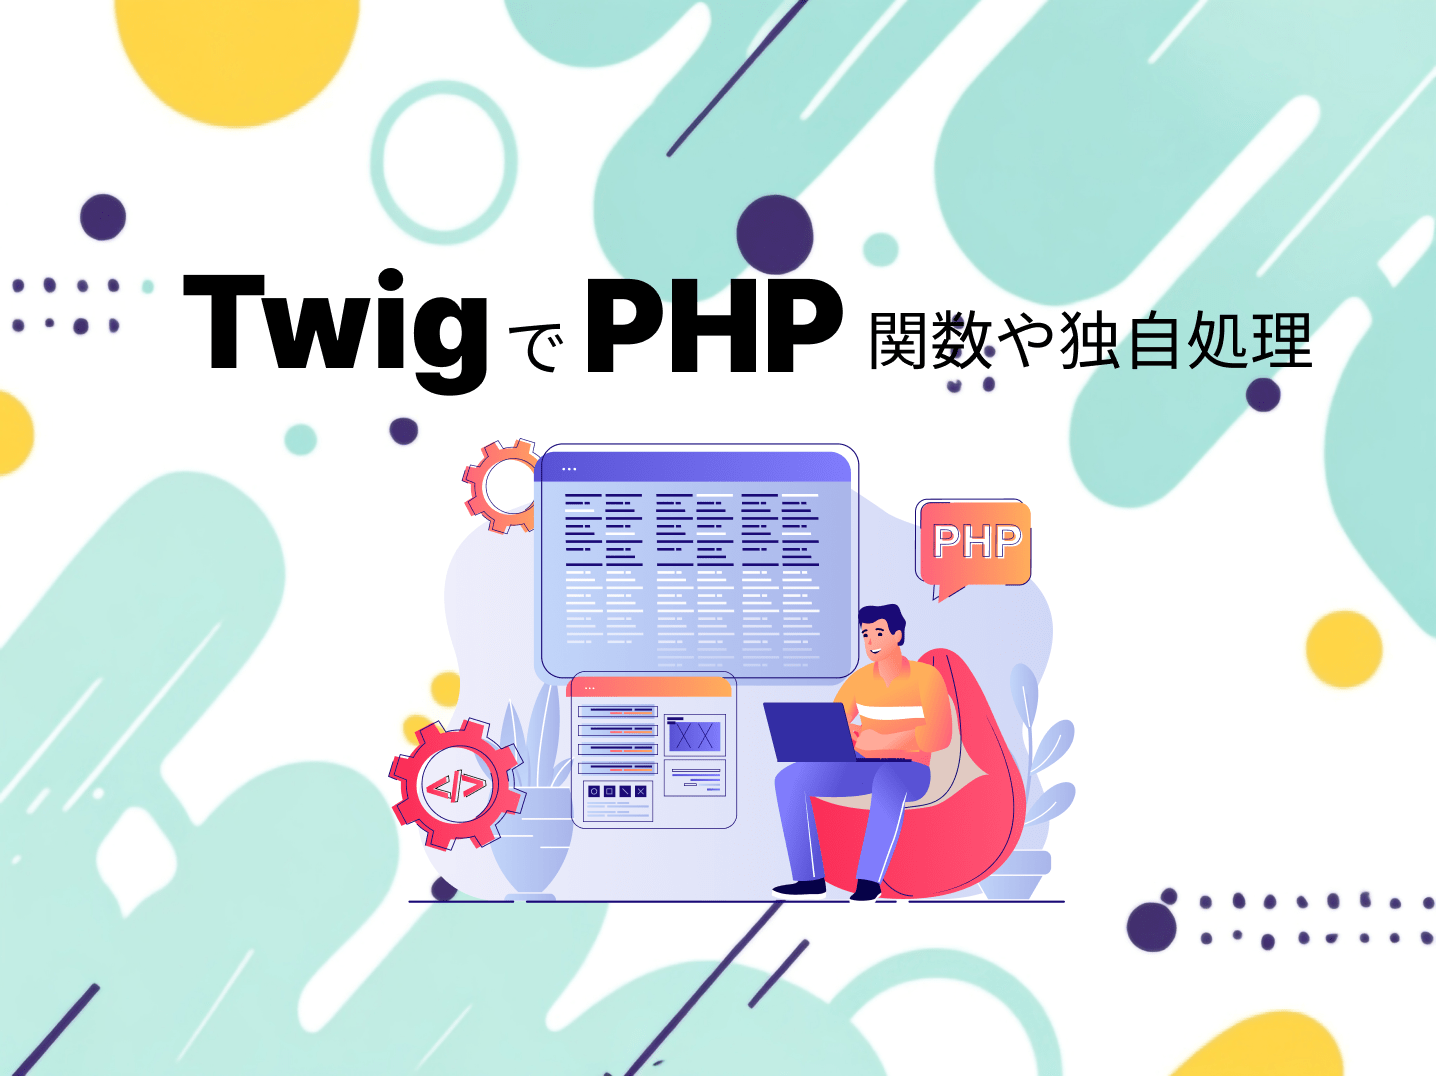 TwigでPHP関数や独自処理を実行する。イメージ